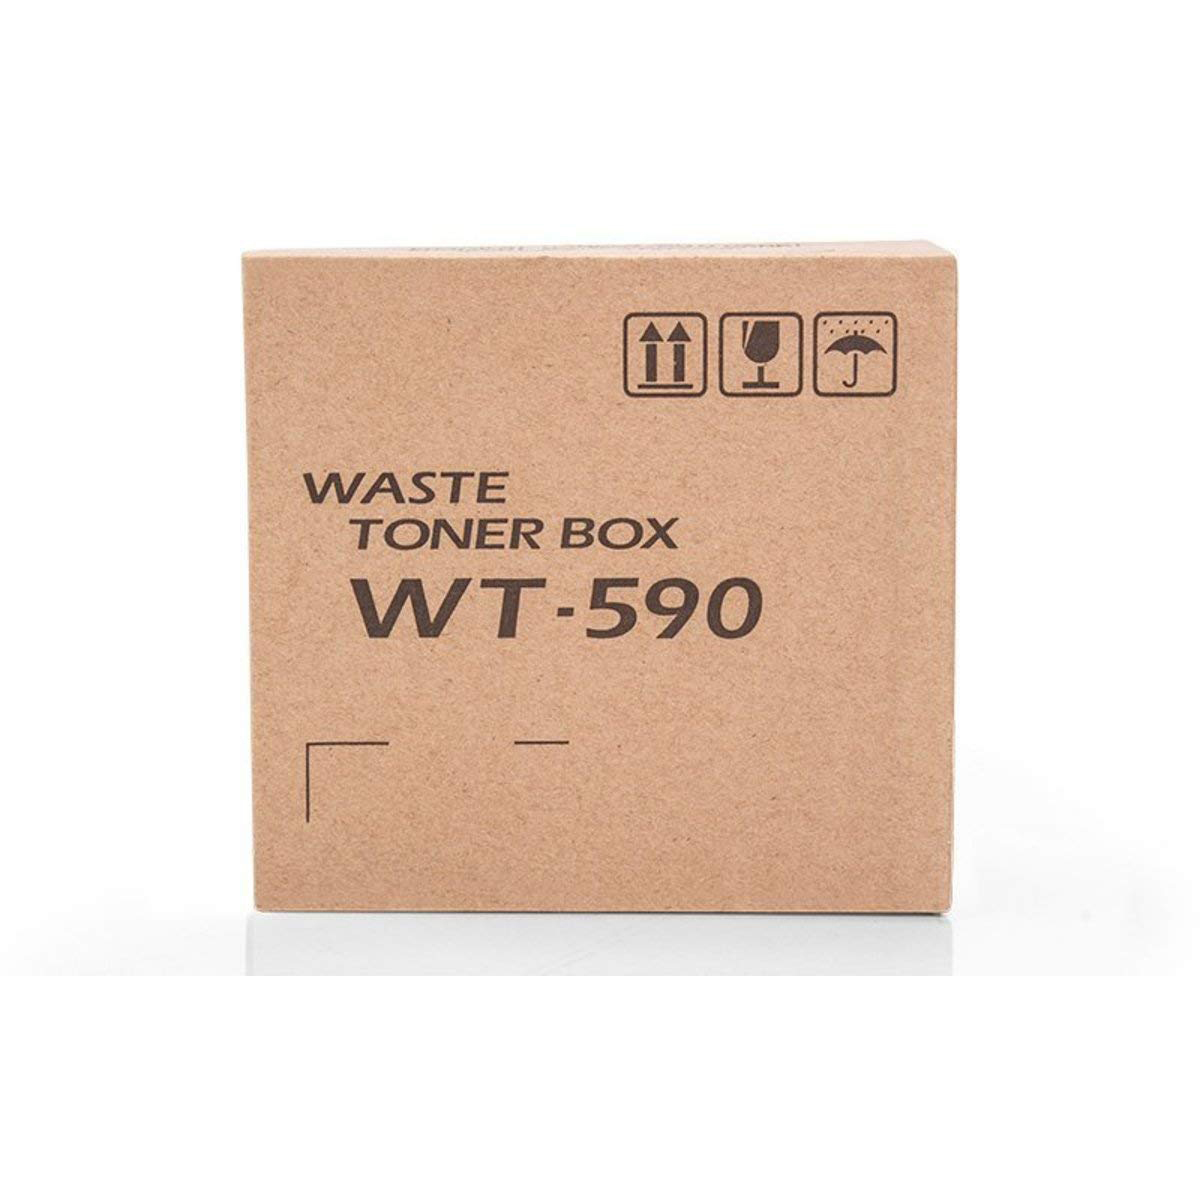 Original Kyocera WT-590 Waste Toner Box (302KV93110)